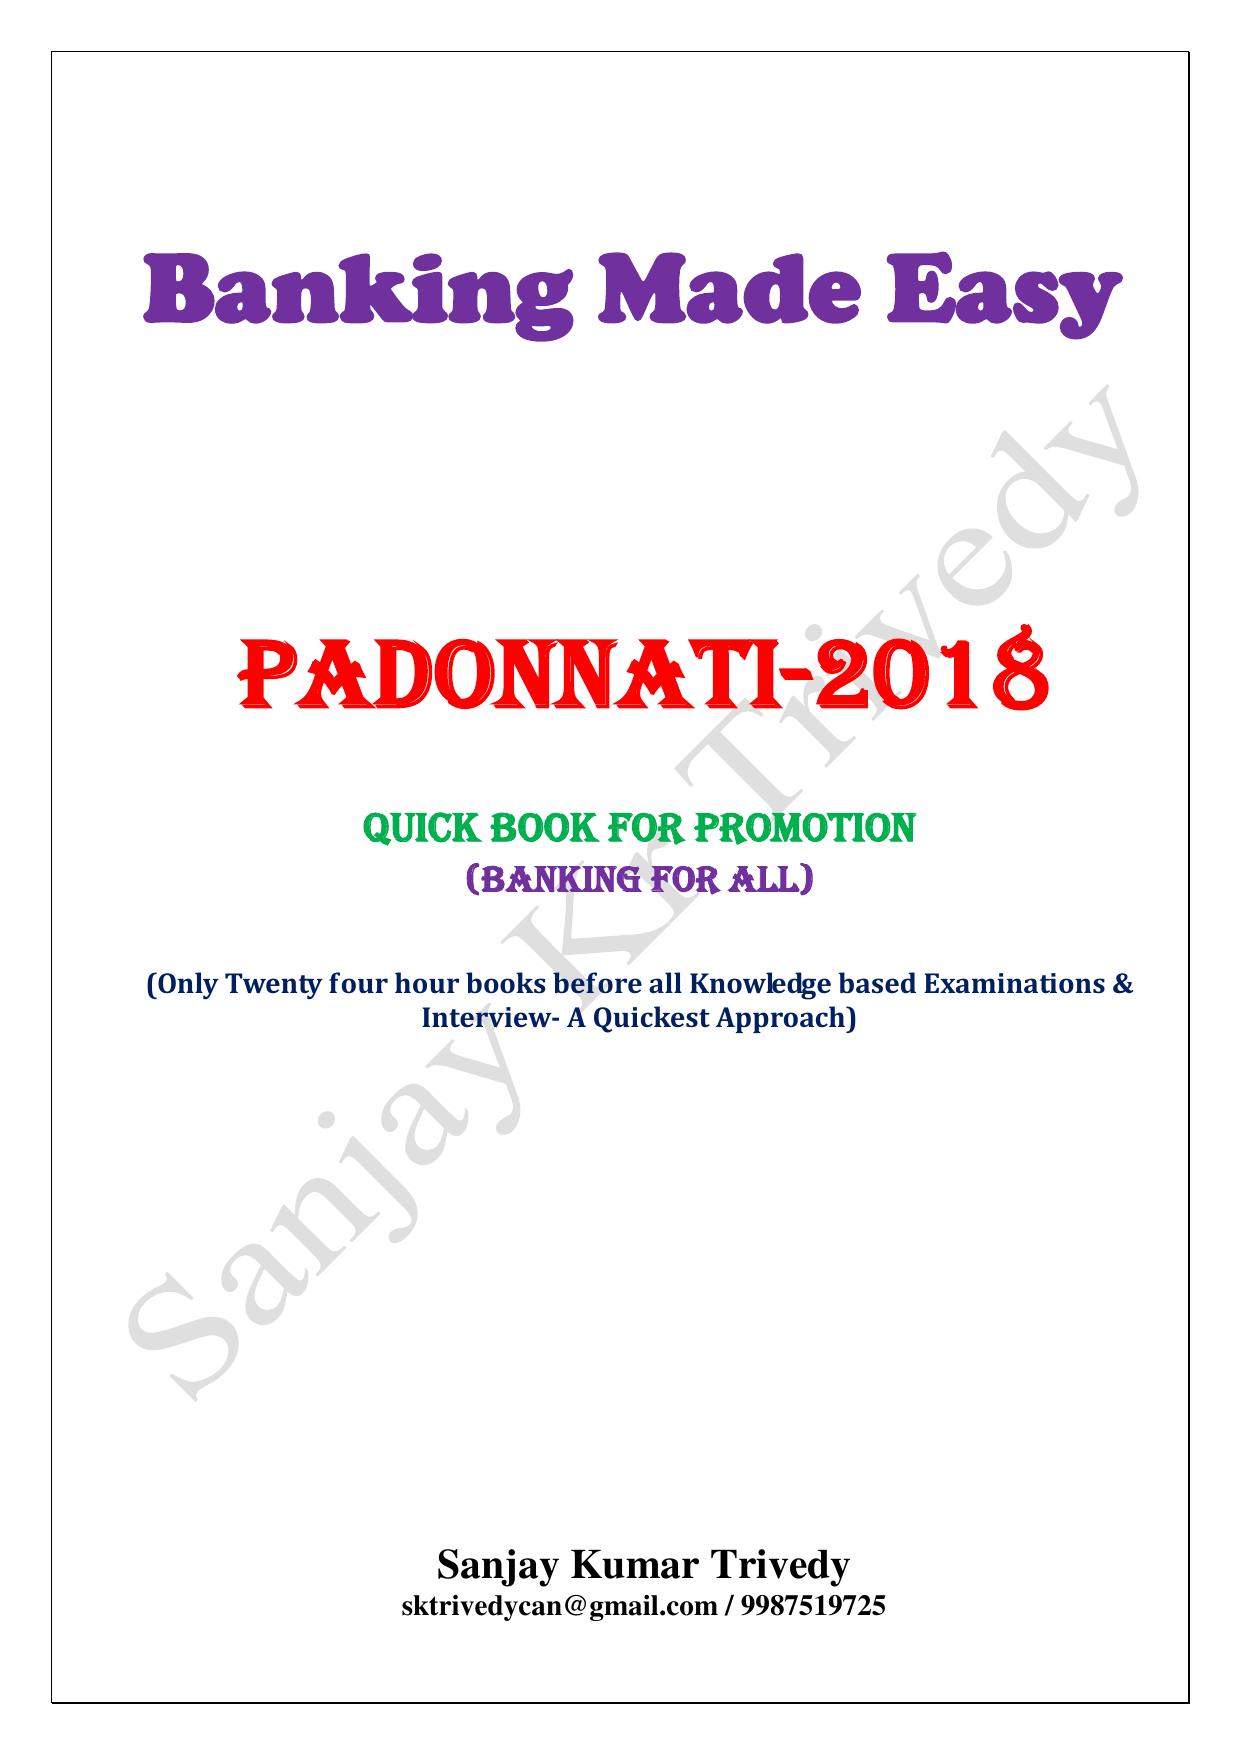 Microsoft Word - PADONNATI - BANKING MADE EASY